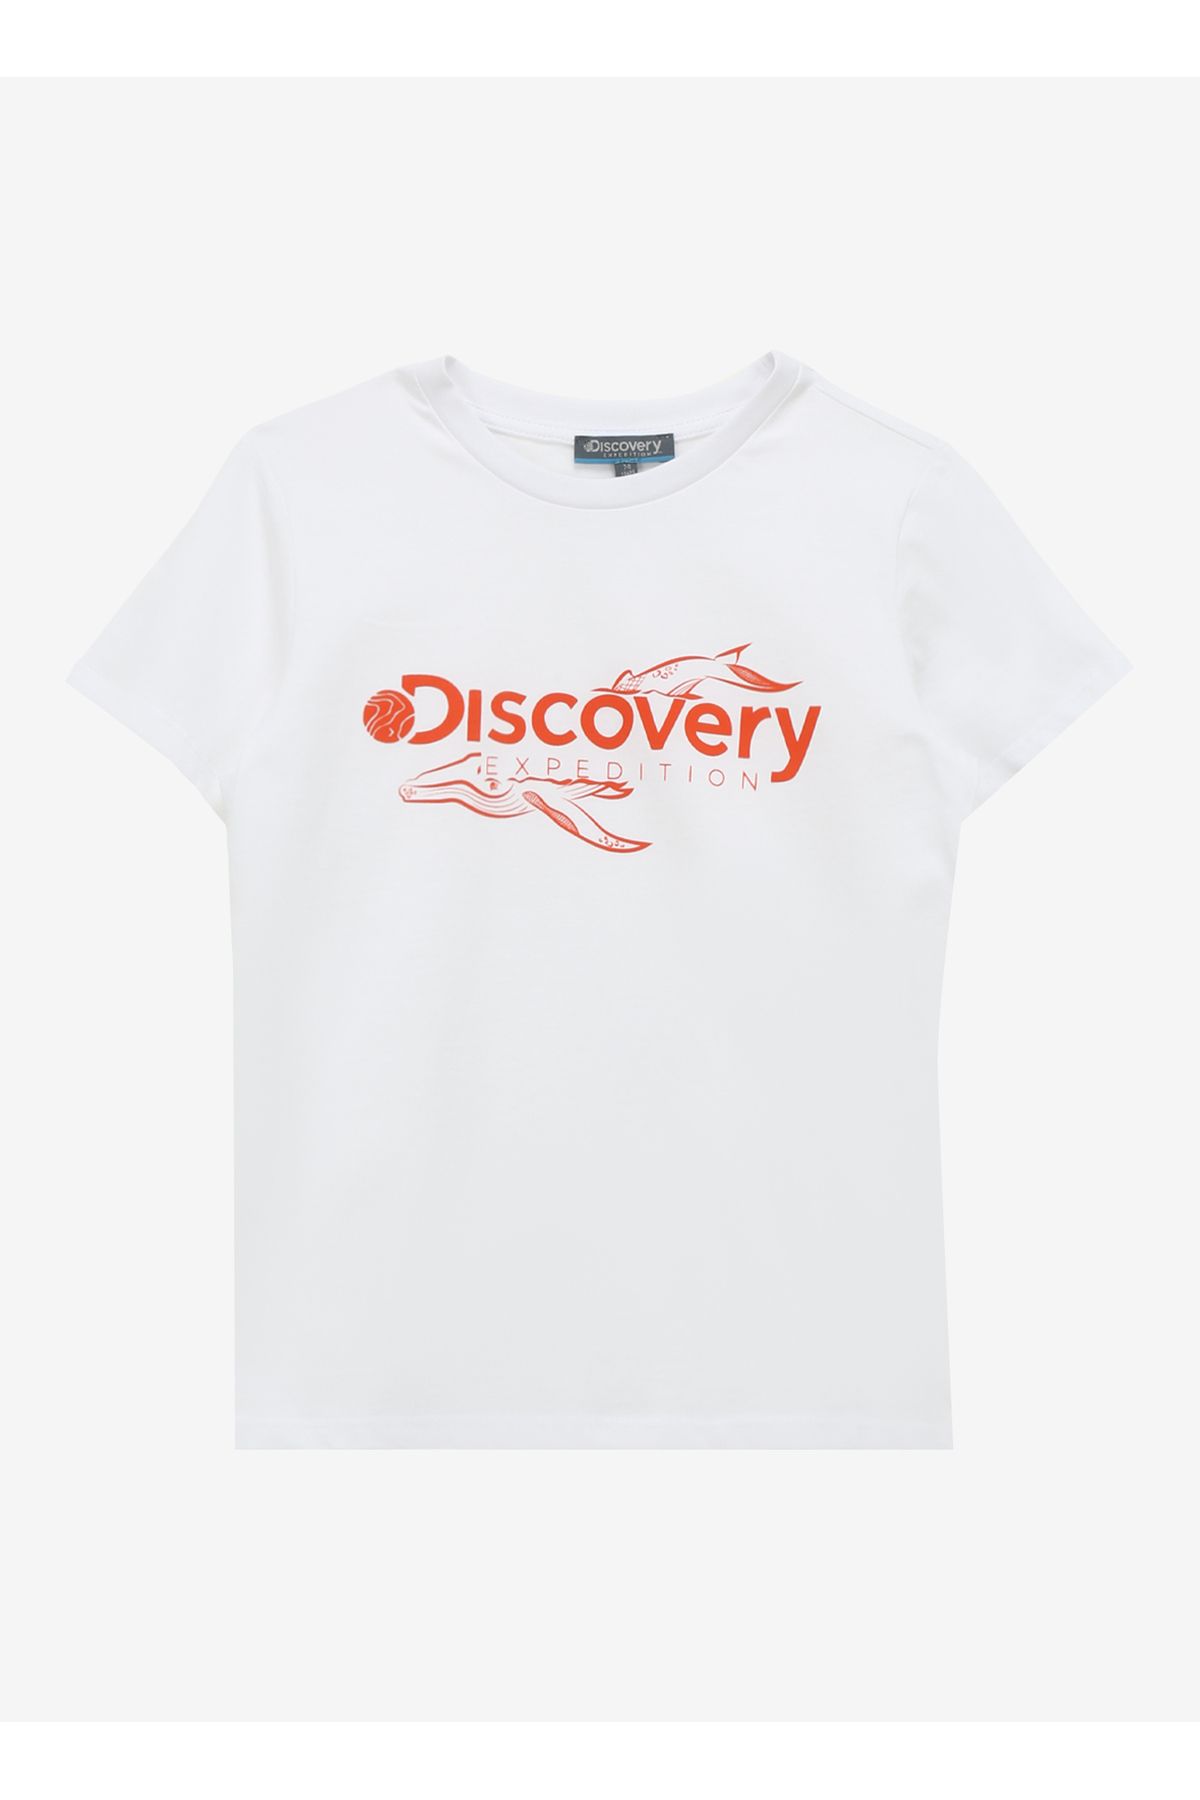 Discovery Expedition Baskılı Kırık Beyaz Unisex T-Shirt D4SU-TST 3301